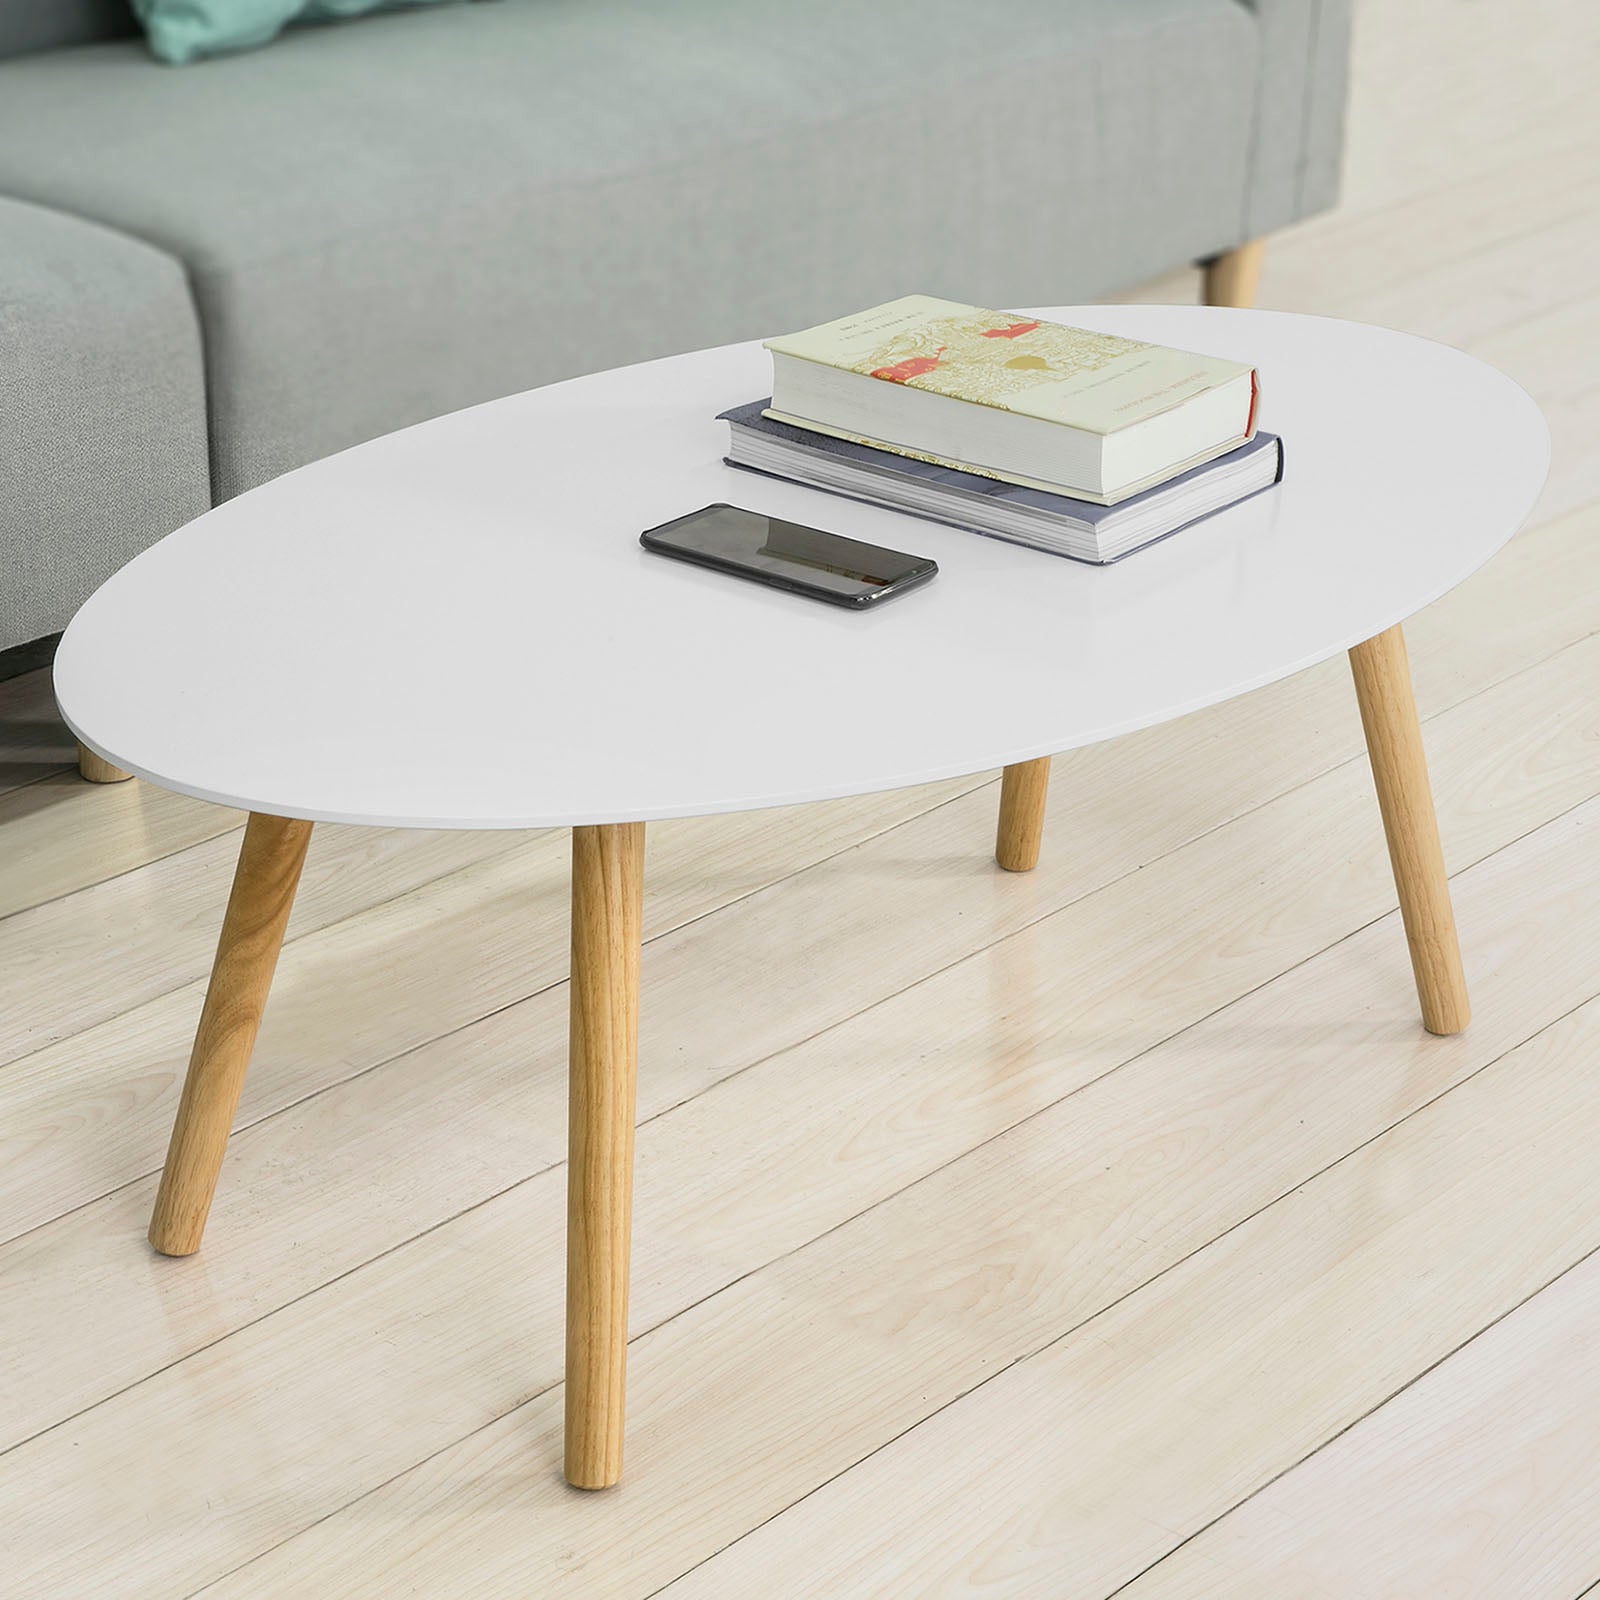 SoBuy Wood White Living Room Oval Coffee Table,FBT61-W